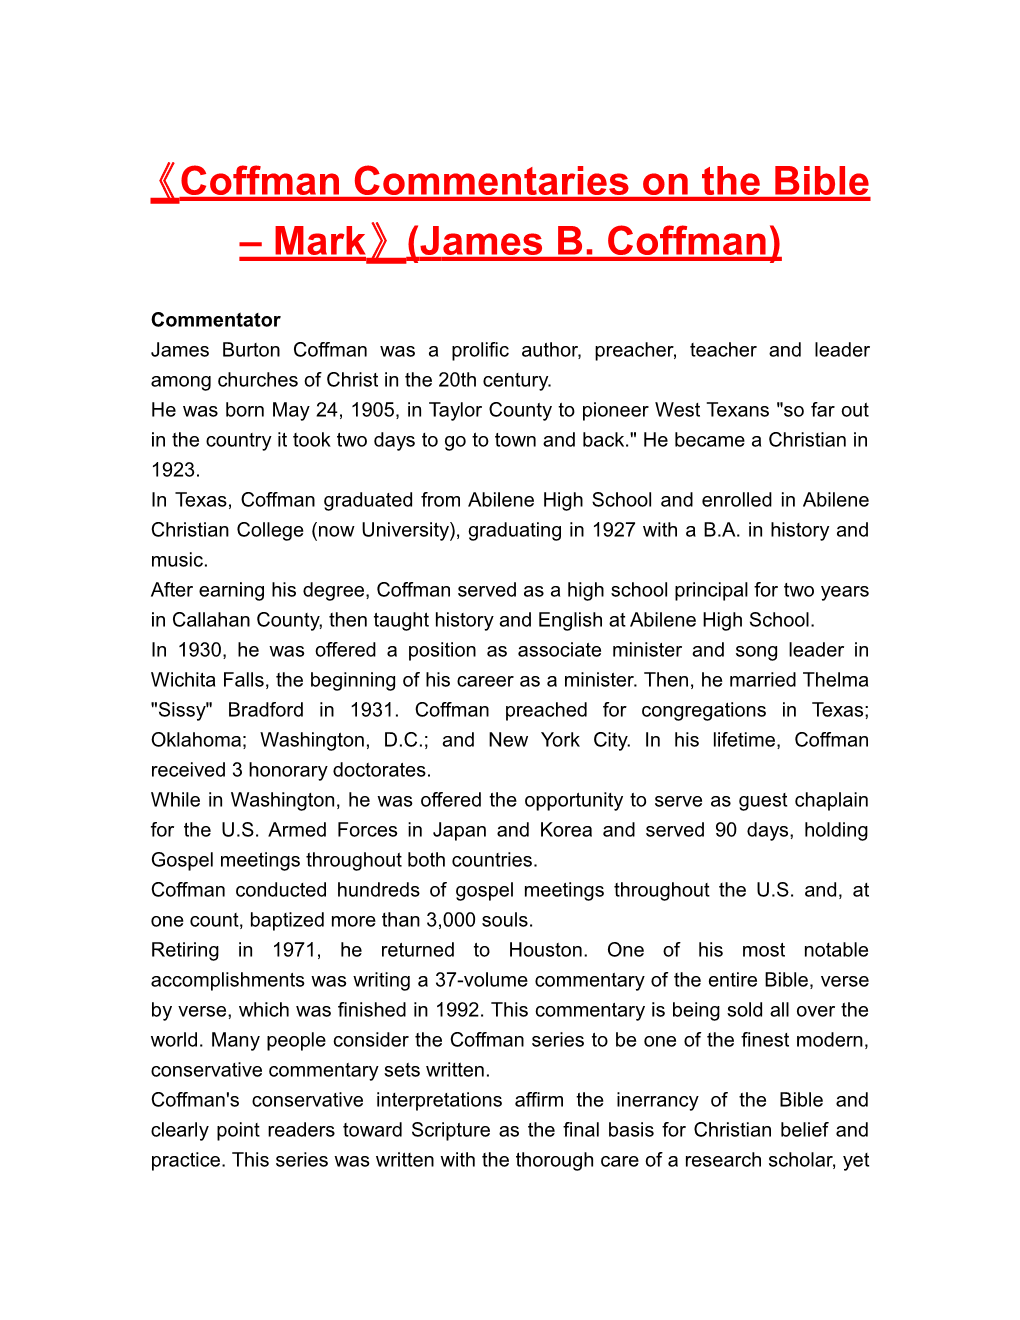 Coffman Commentaries on the Bible Mark (James B. Coffman)